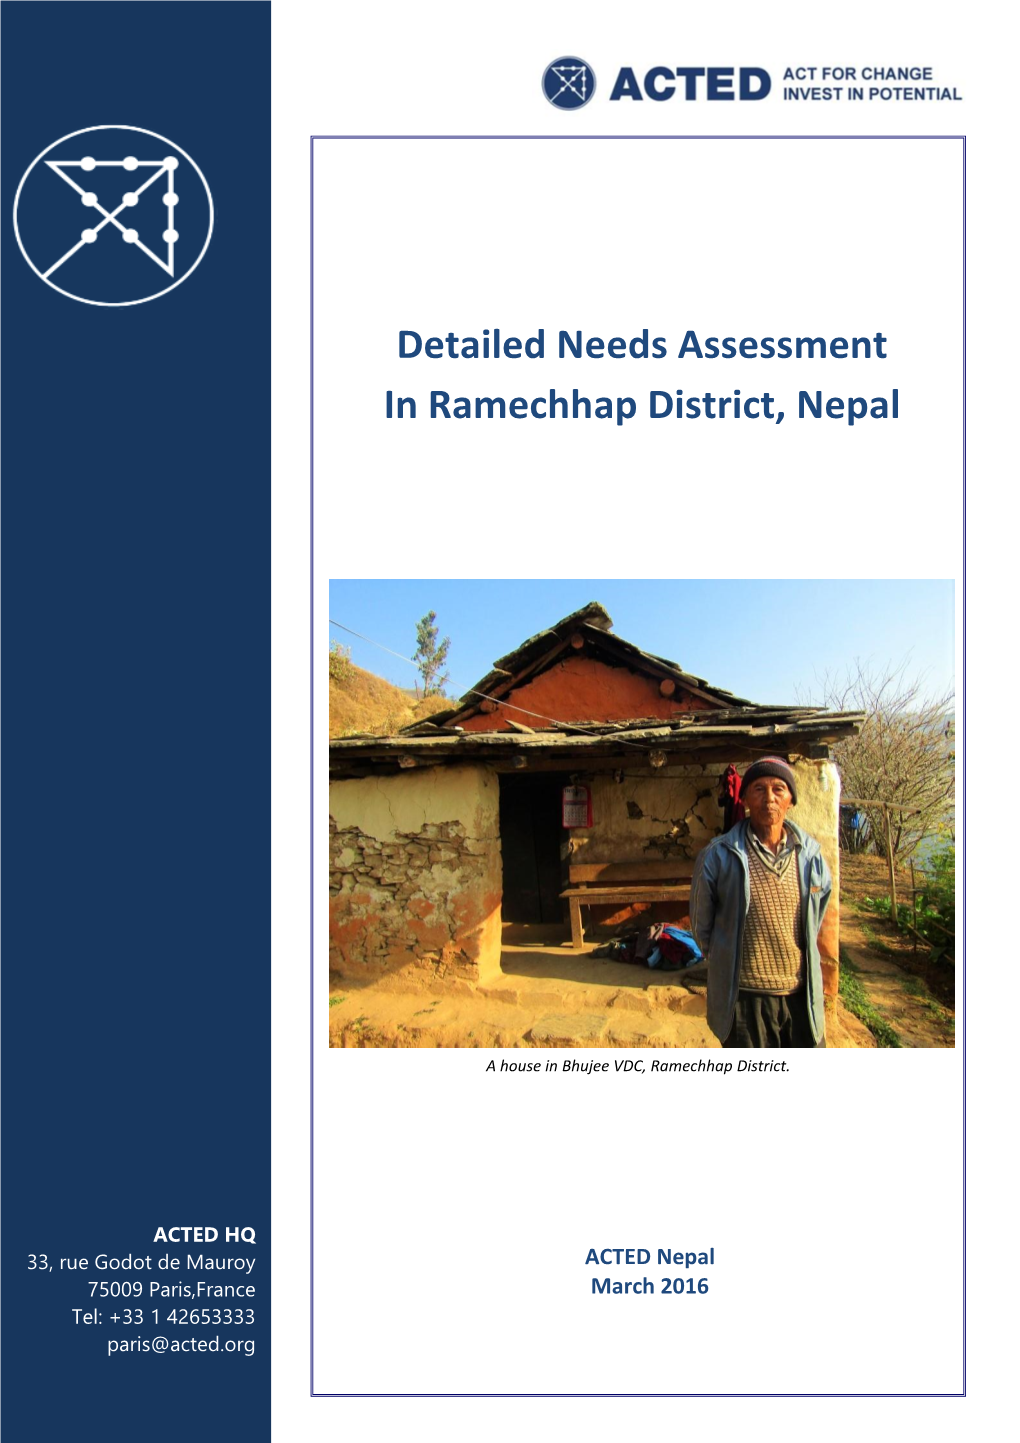 Detailed Needs Assessment in Ramechhap District, Nepal